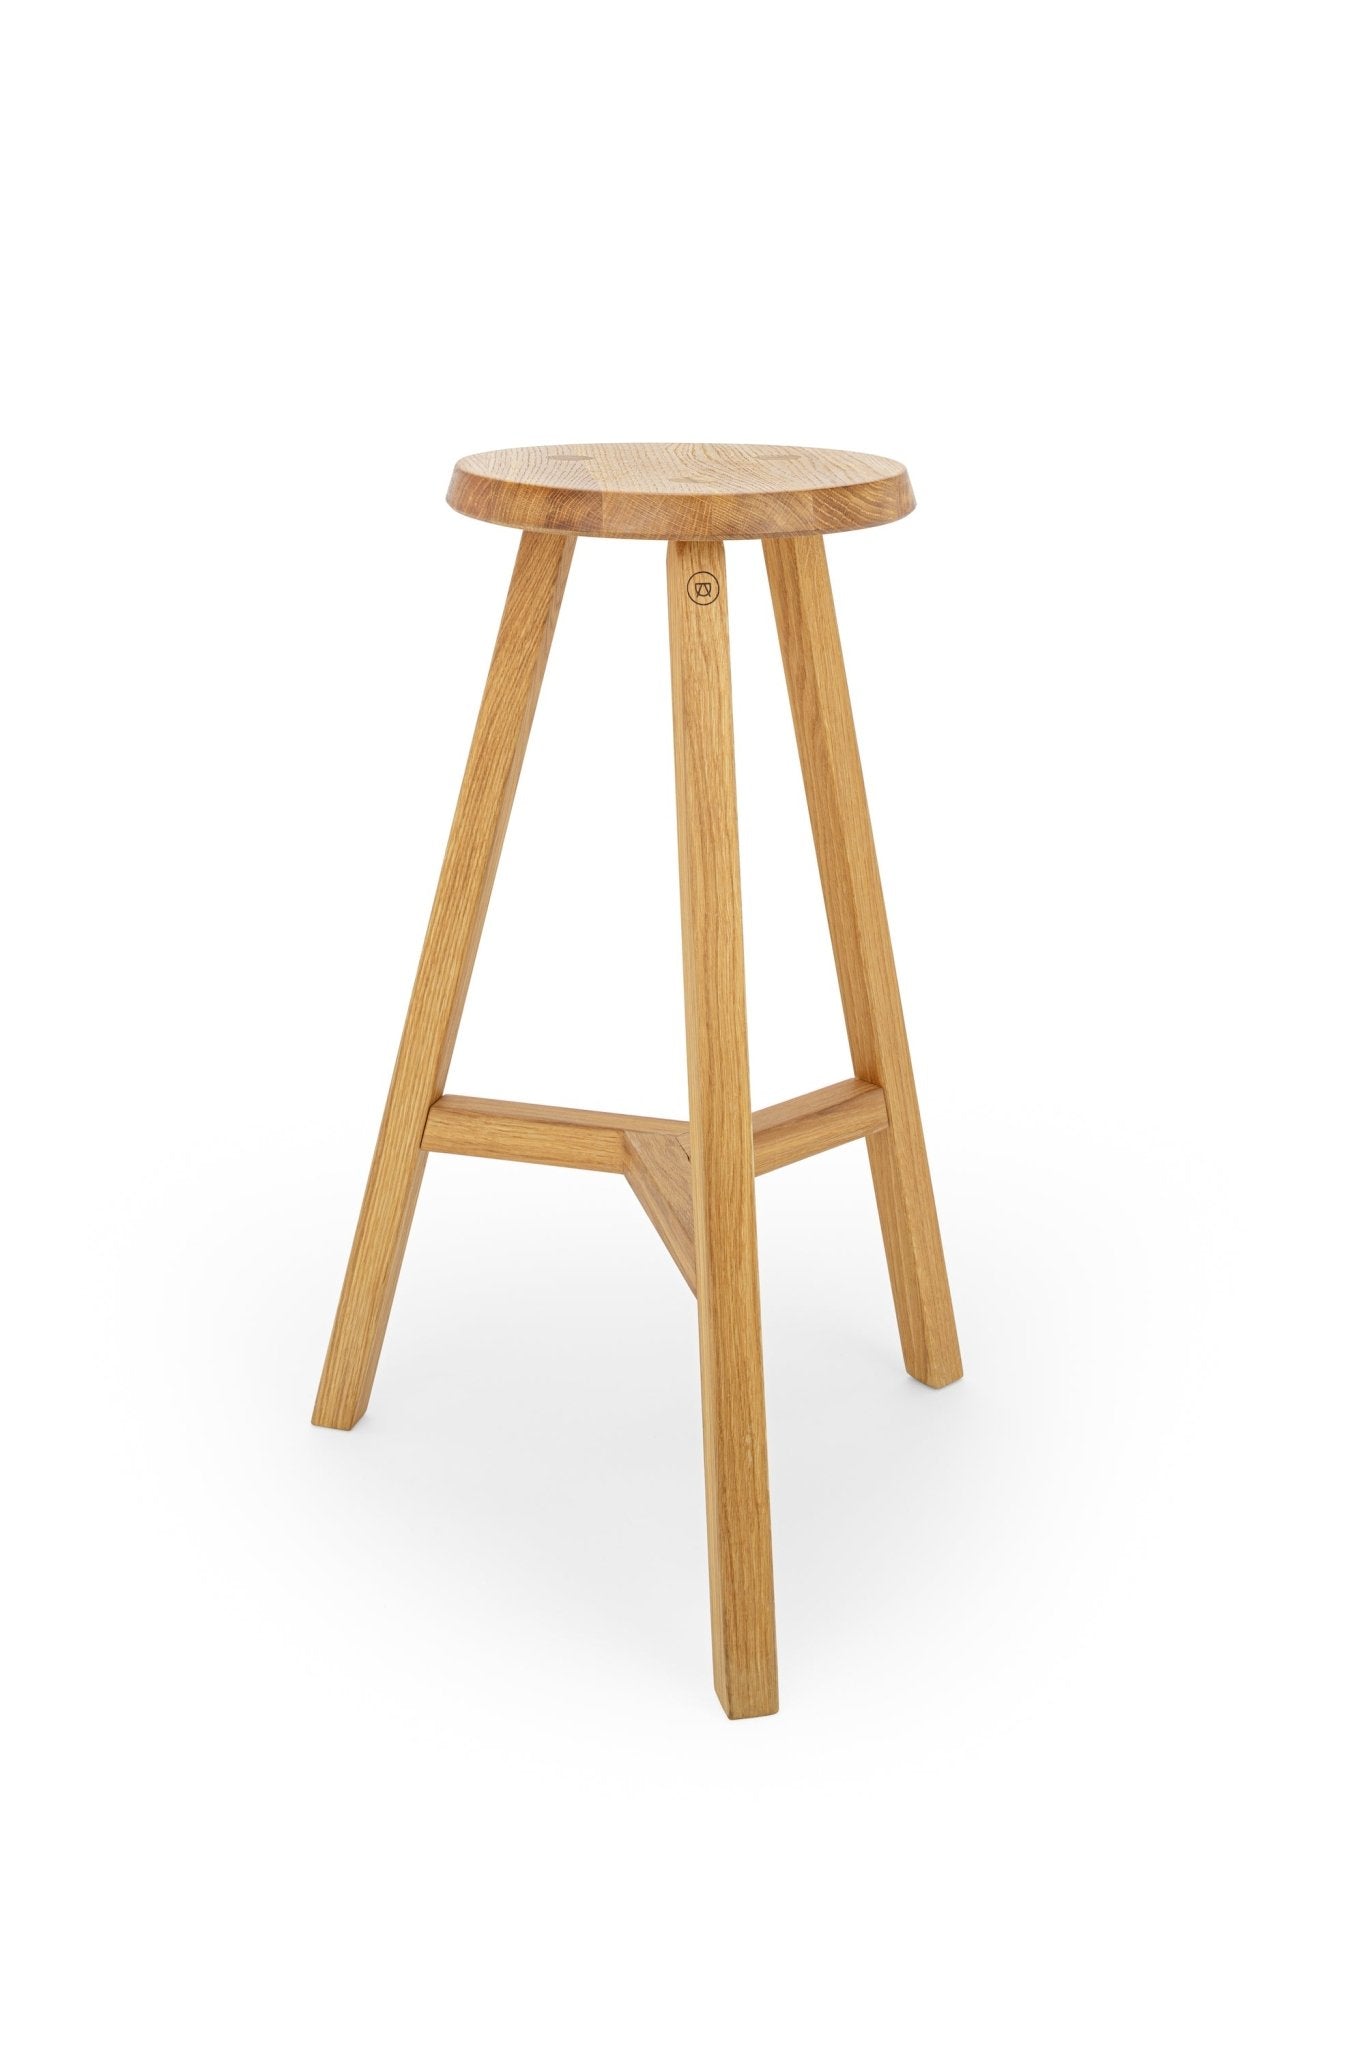 Filigree bar stool “Lia” refined in a honey look